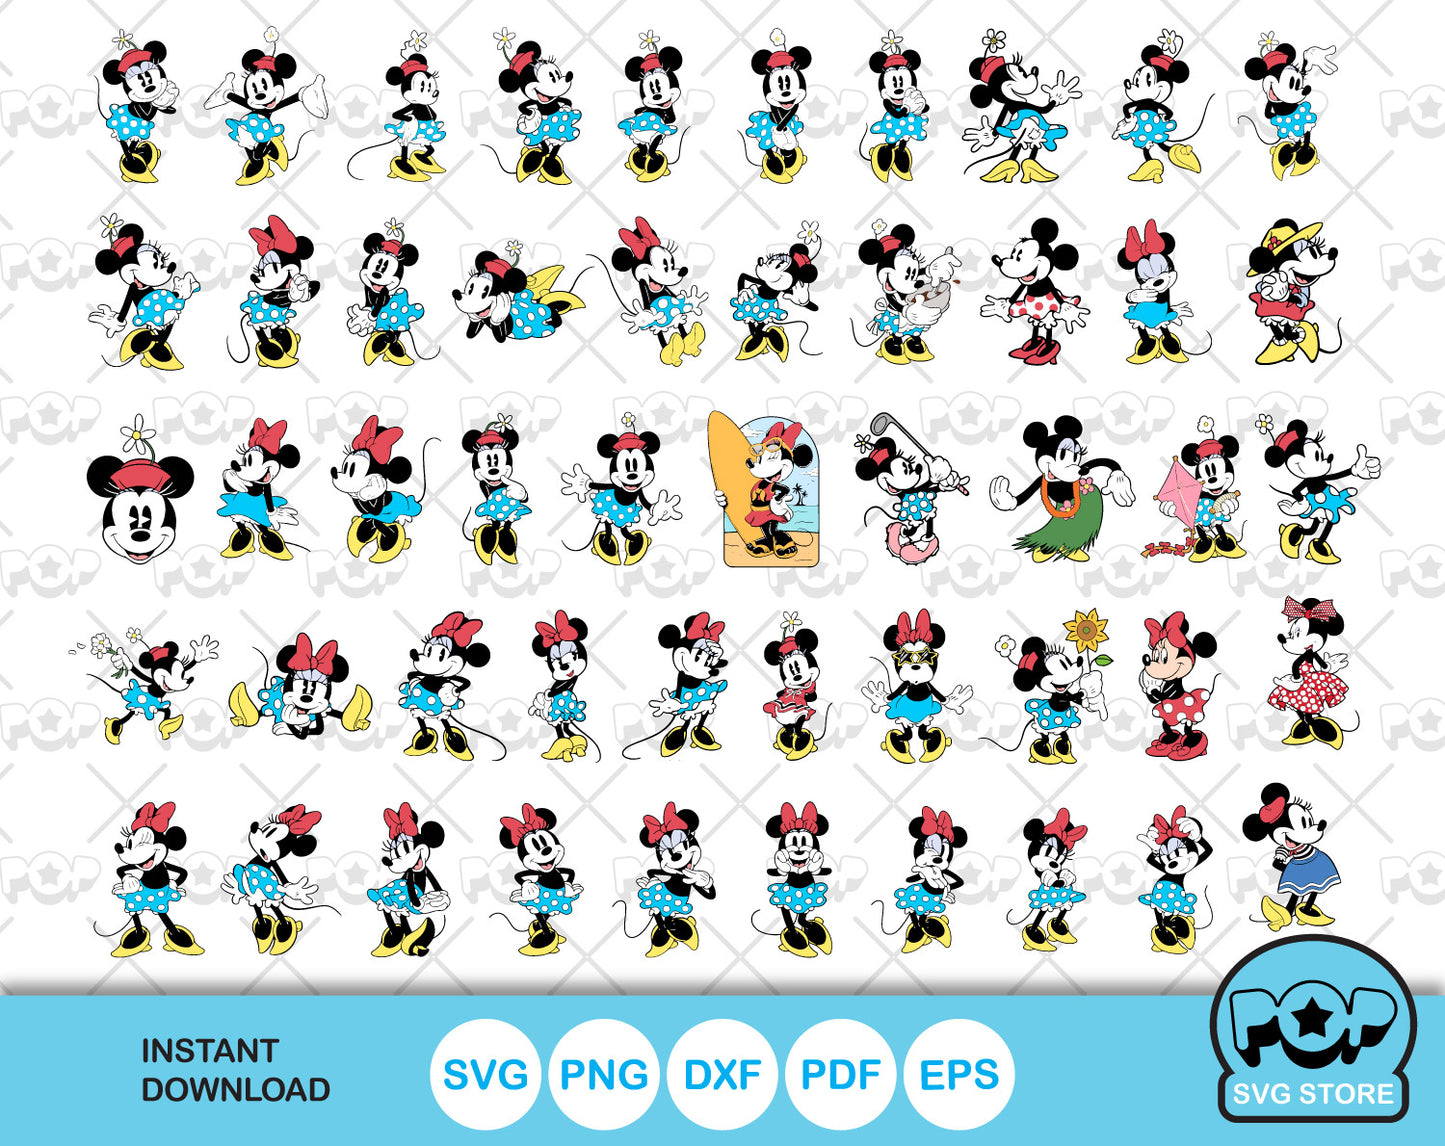 Classic Minnie Mouse 100 cliparts bundle, Minnie svg cut files for Cricut / Silhouette, Minnie Mouse png